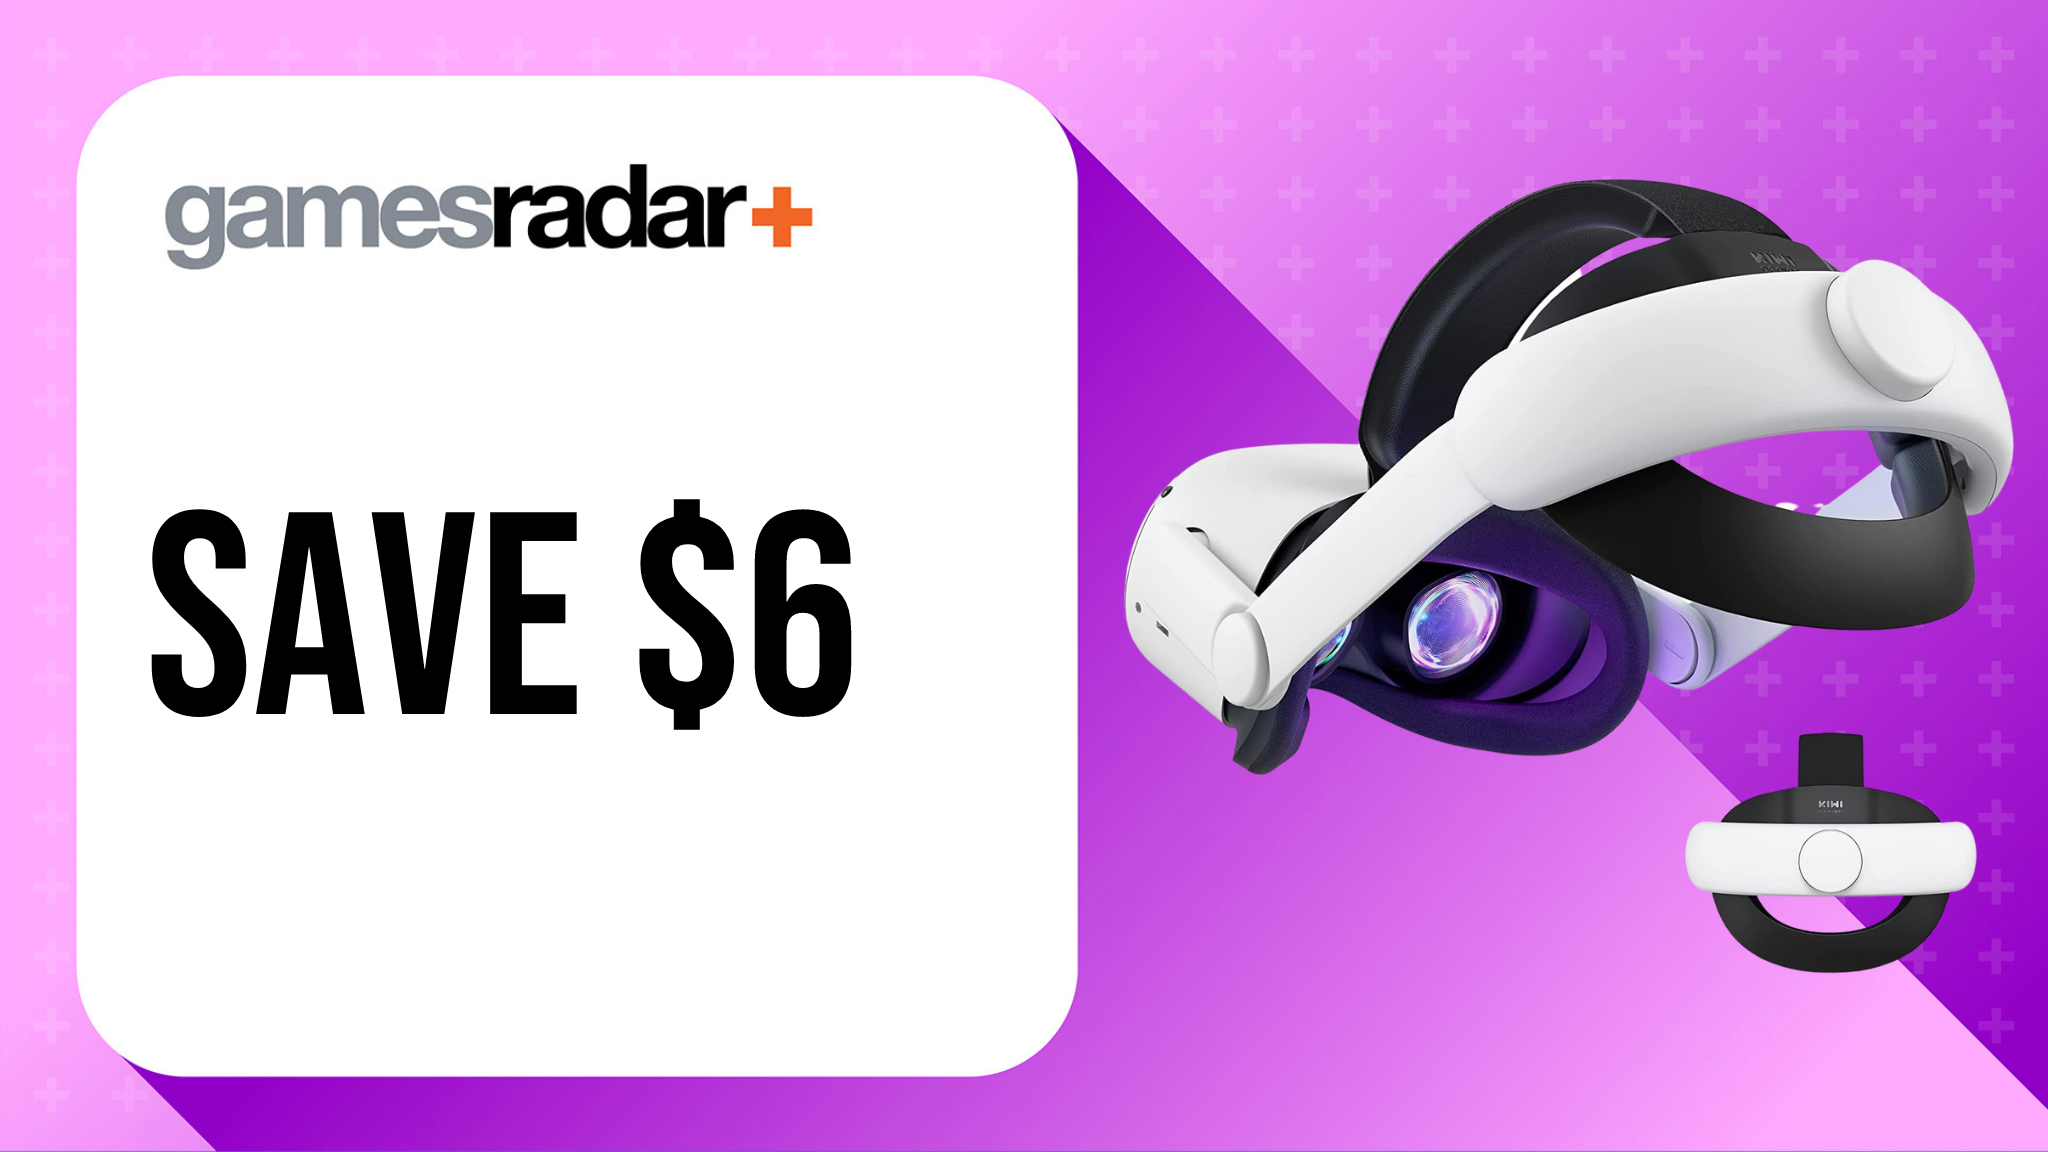 Kiwi Design Headband deal with $6 saving stamp